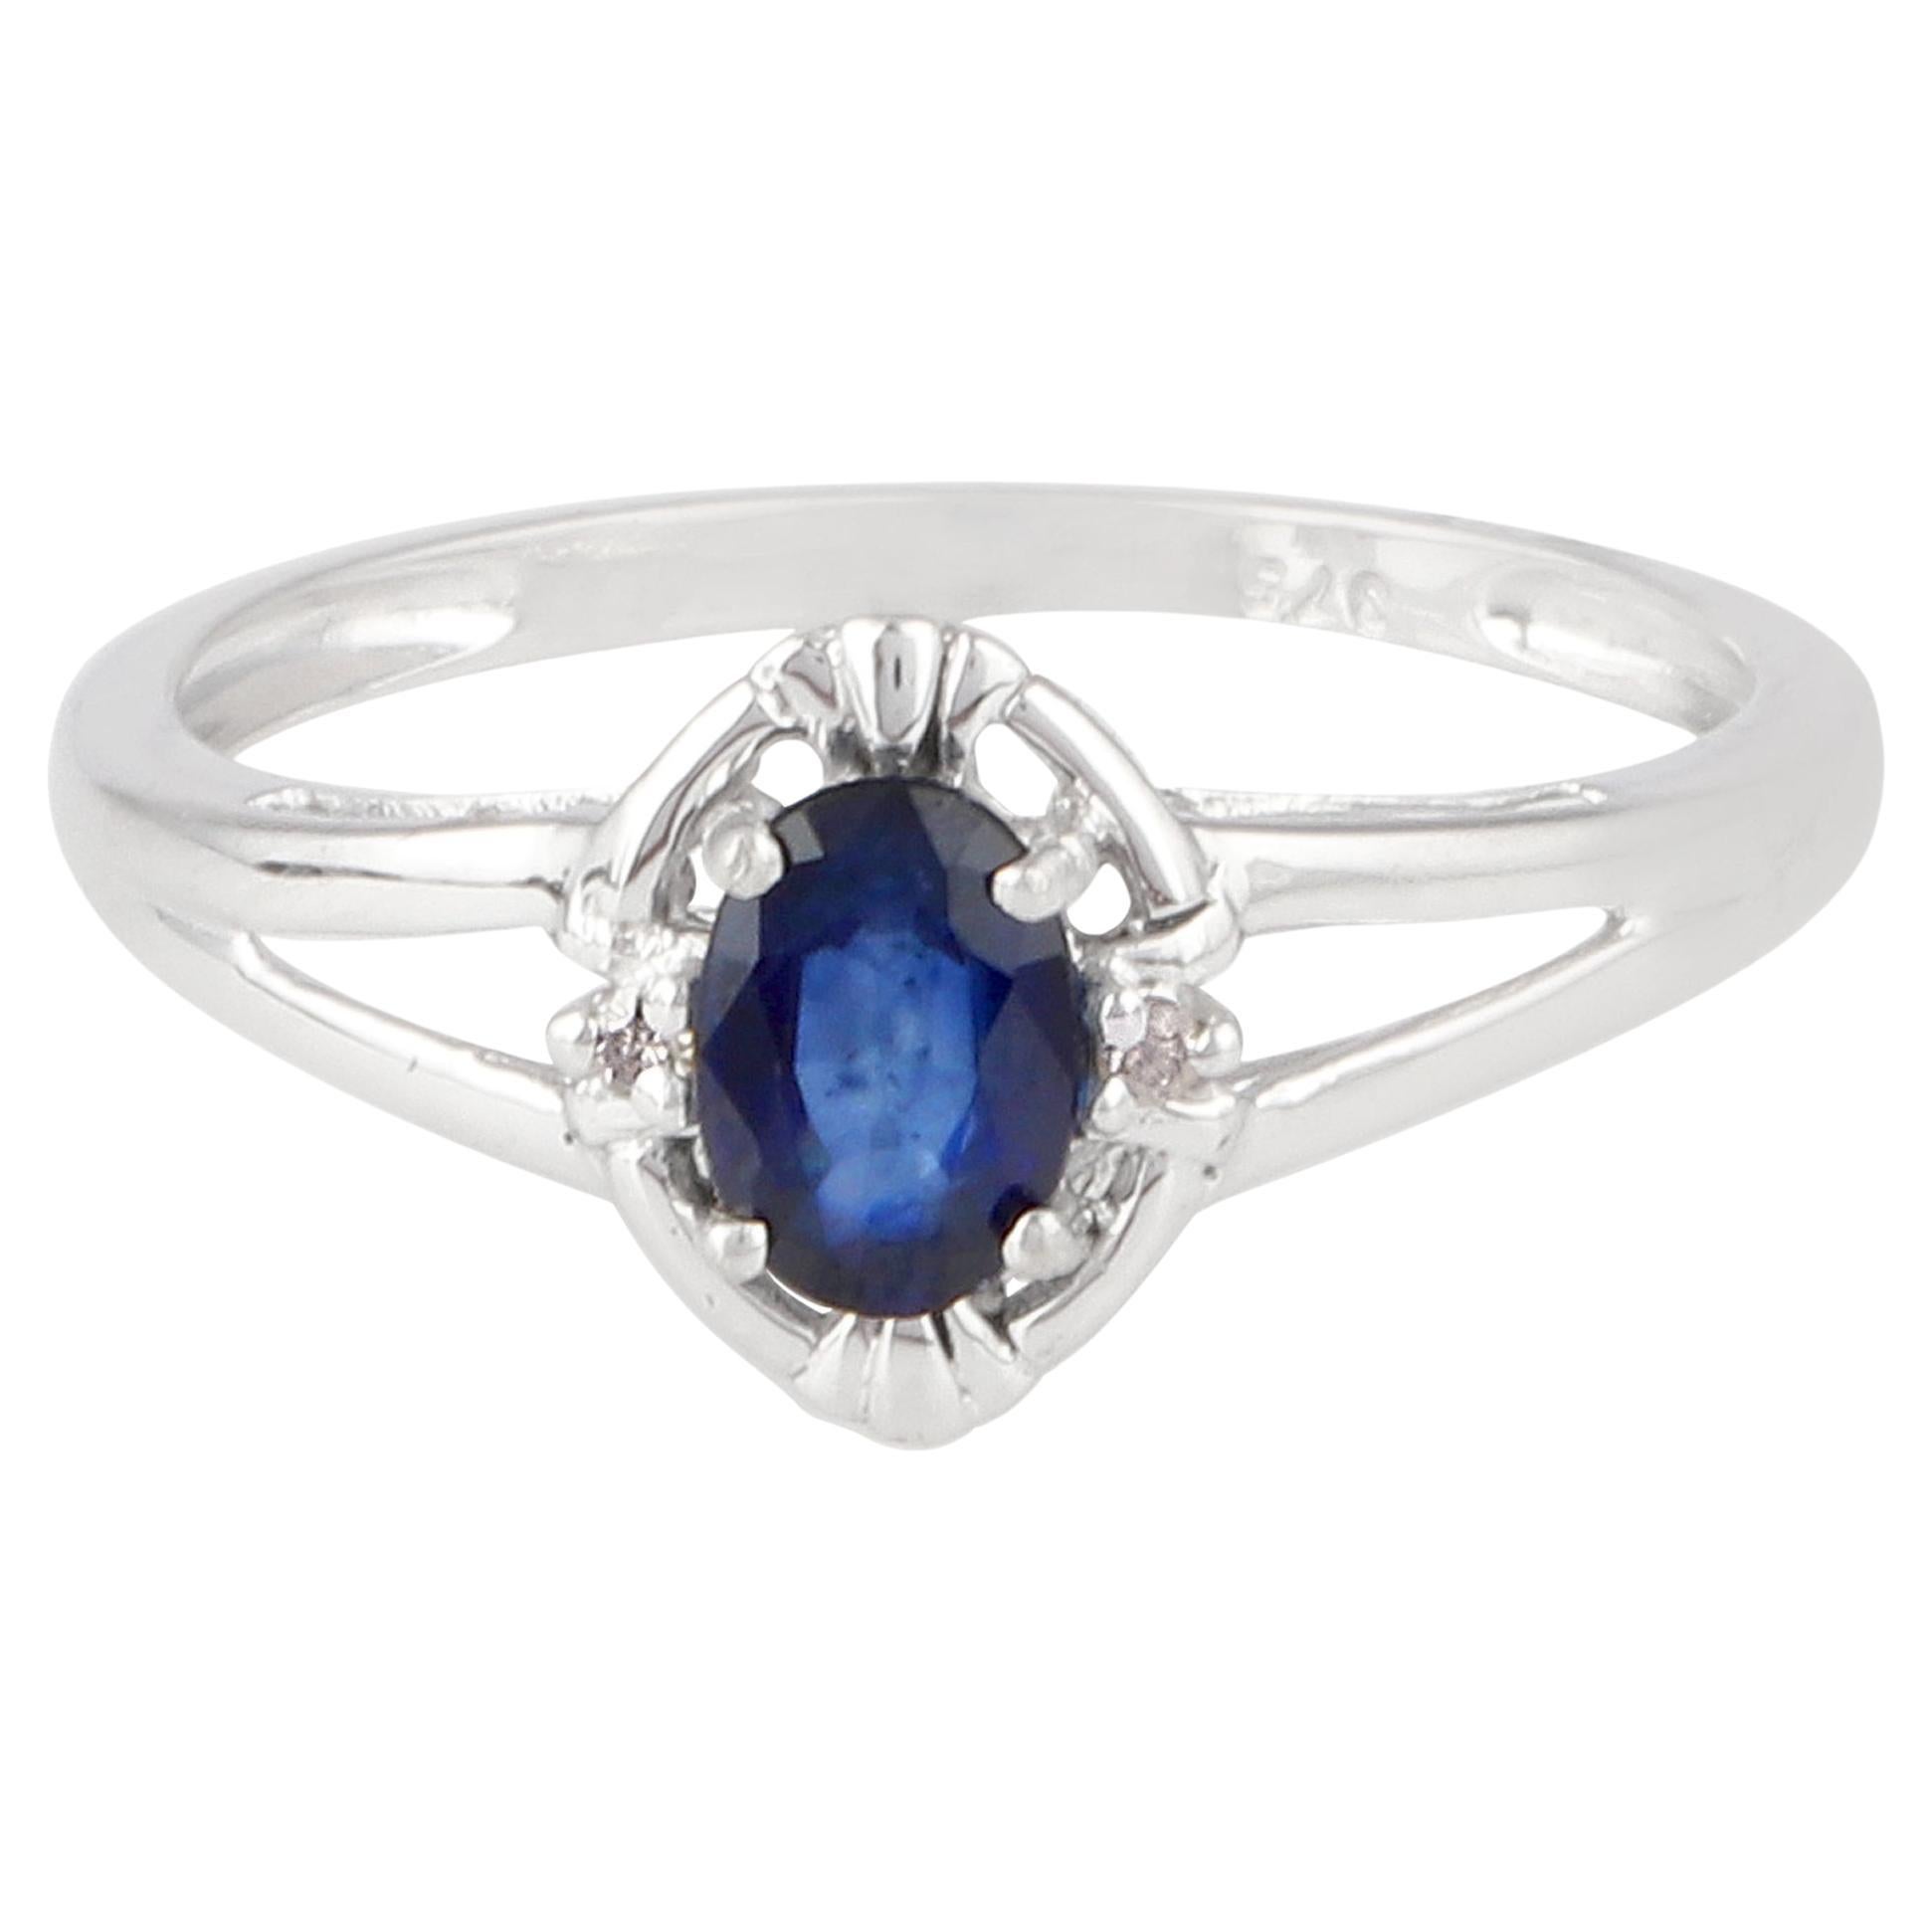 For Sale:  Natural Blue Sapphire Gemstone Ring Diamond Pave 9 Karat White Gold Fine Jewelry